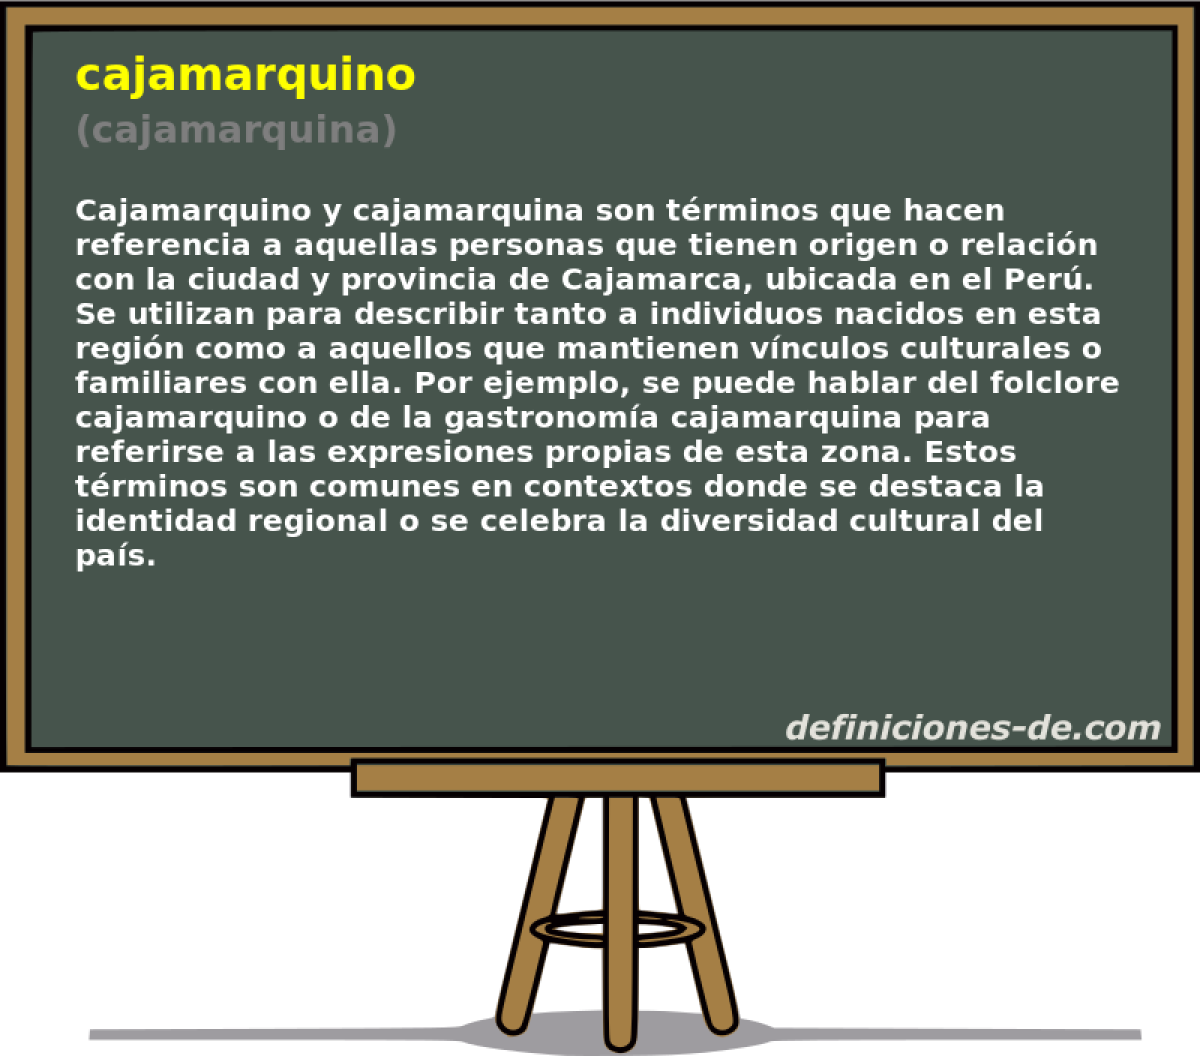 cajamarquino (cajamarquina)